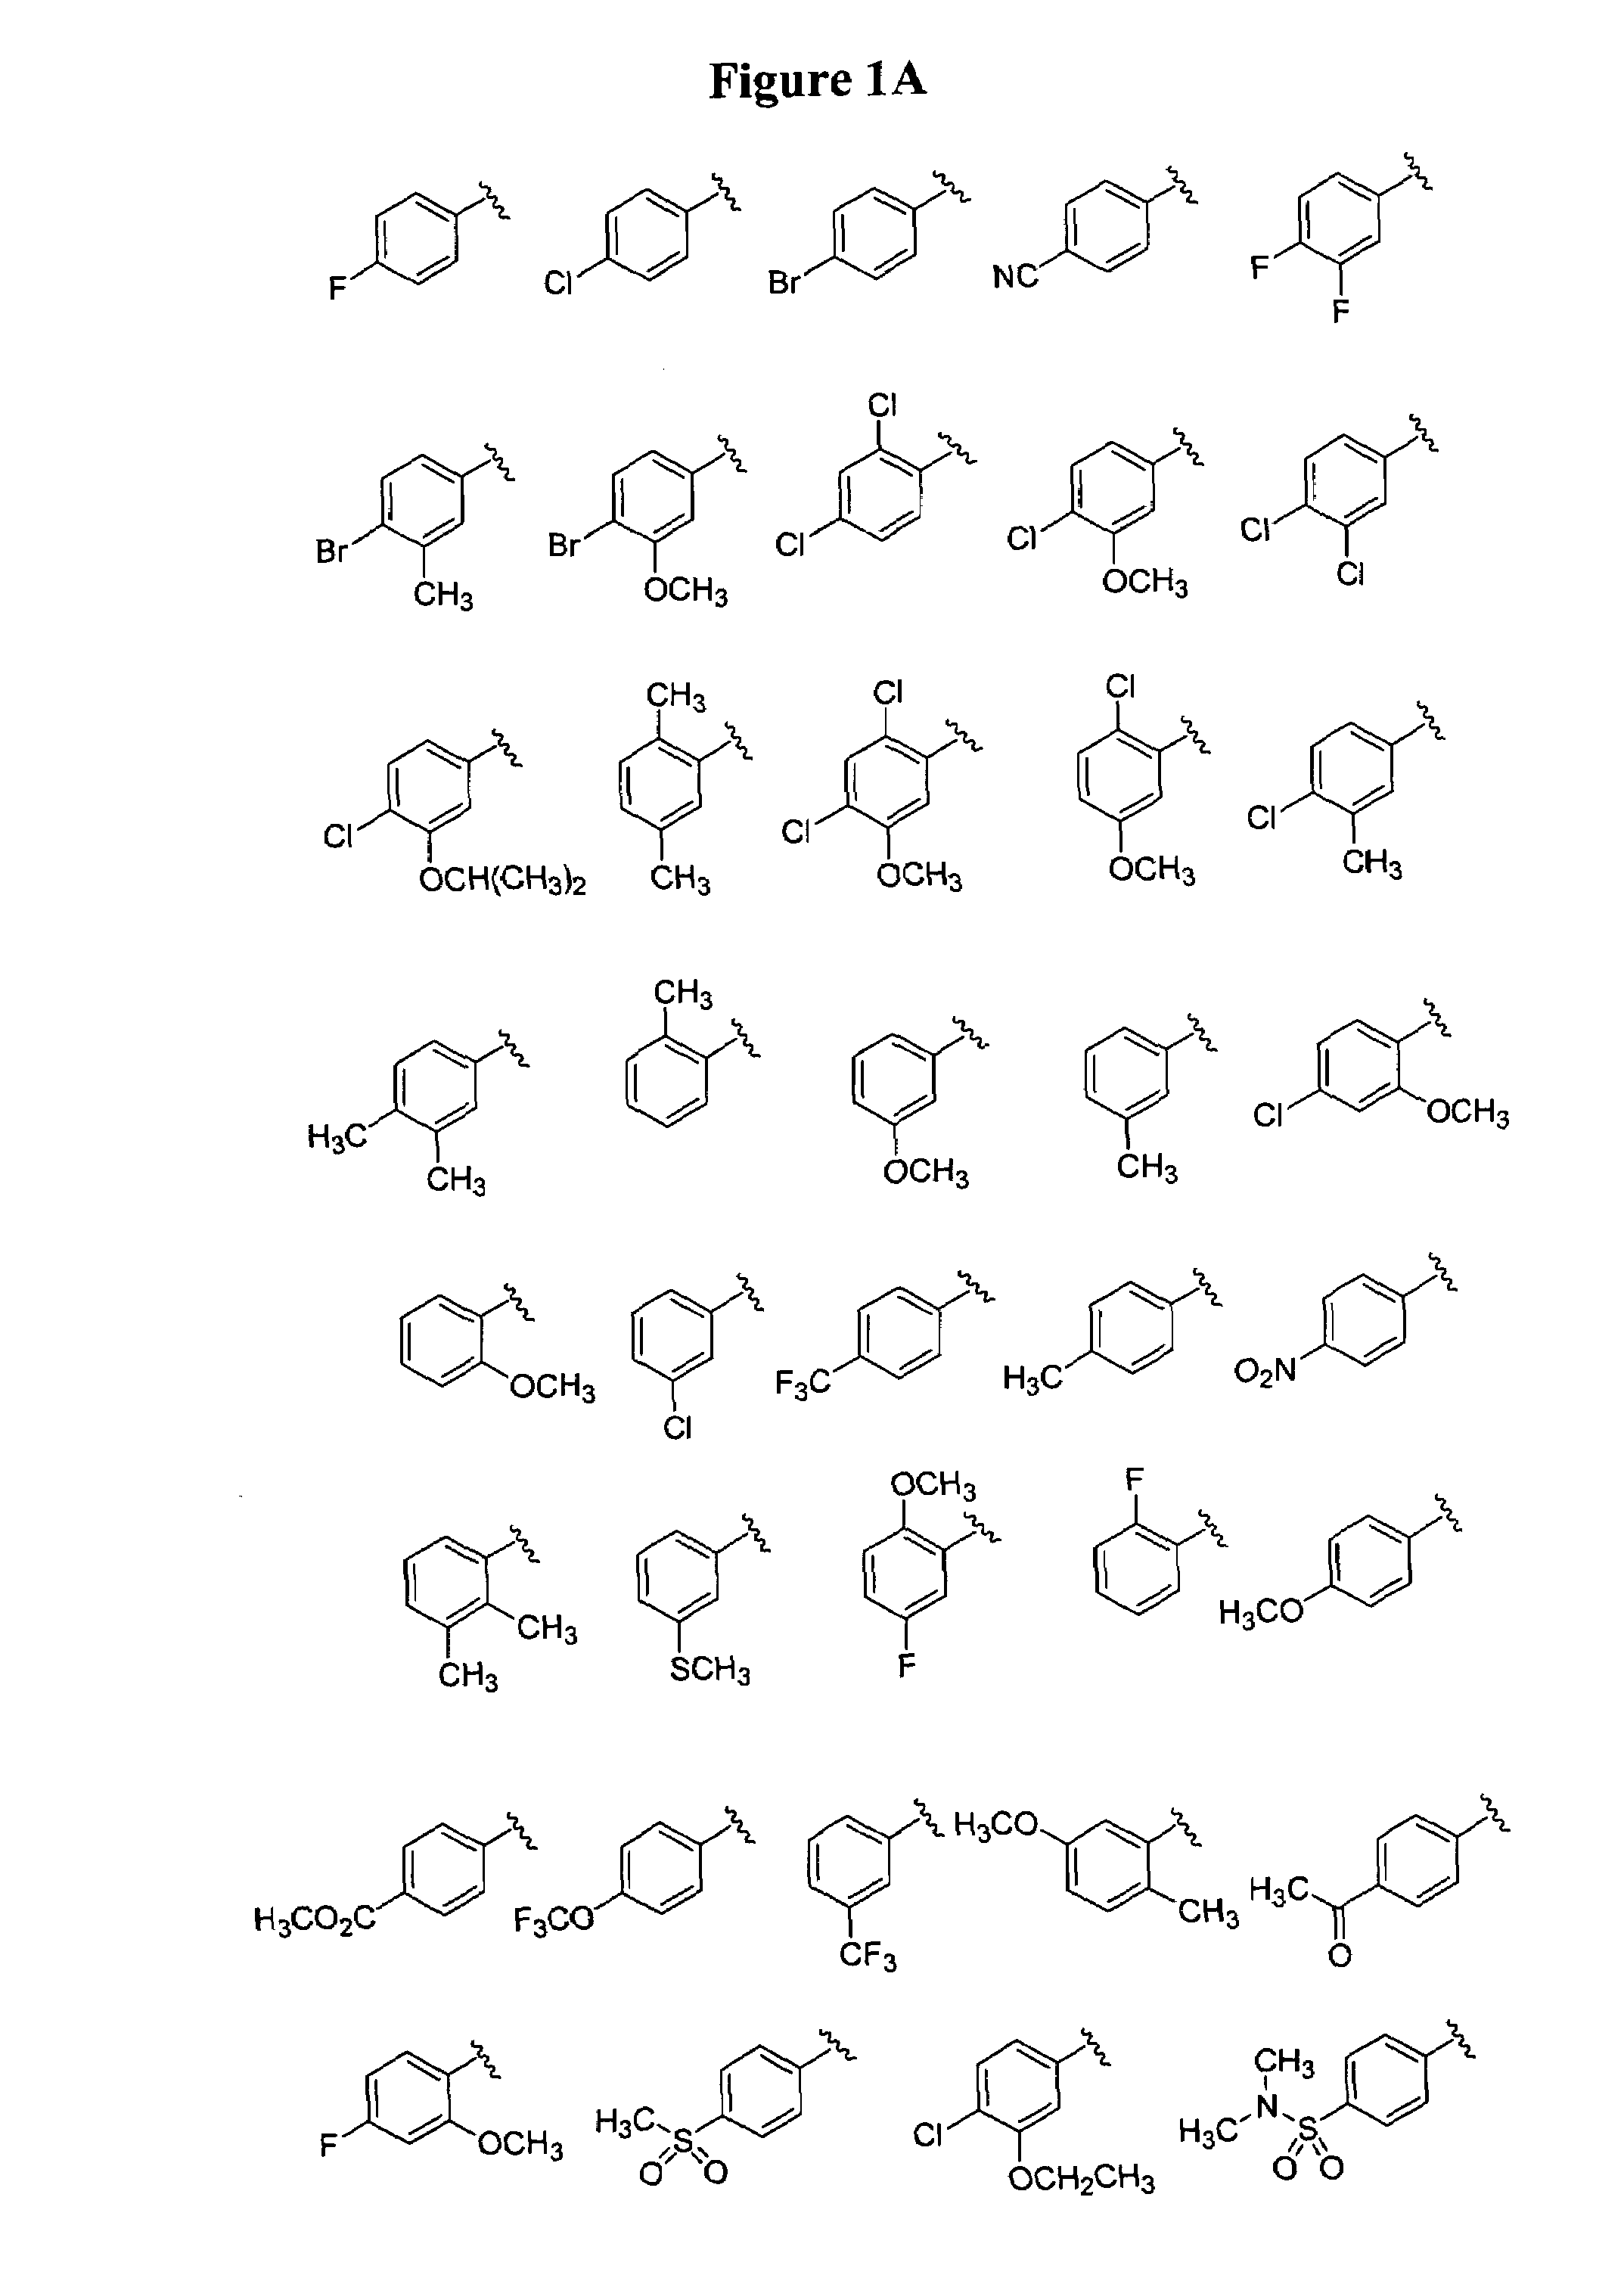 Bicyclic and bridged nitrogen heterocycles